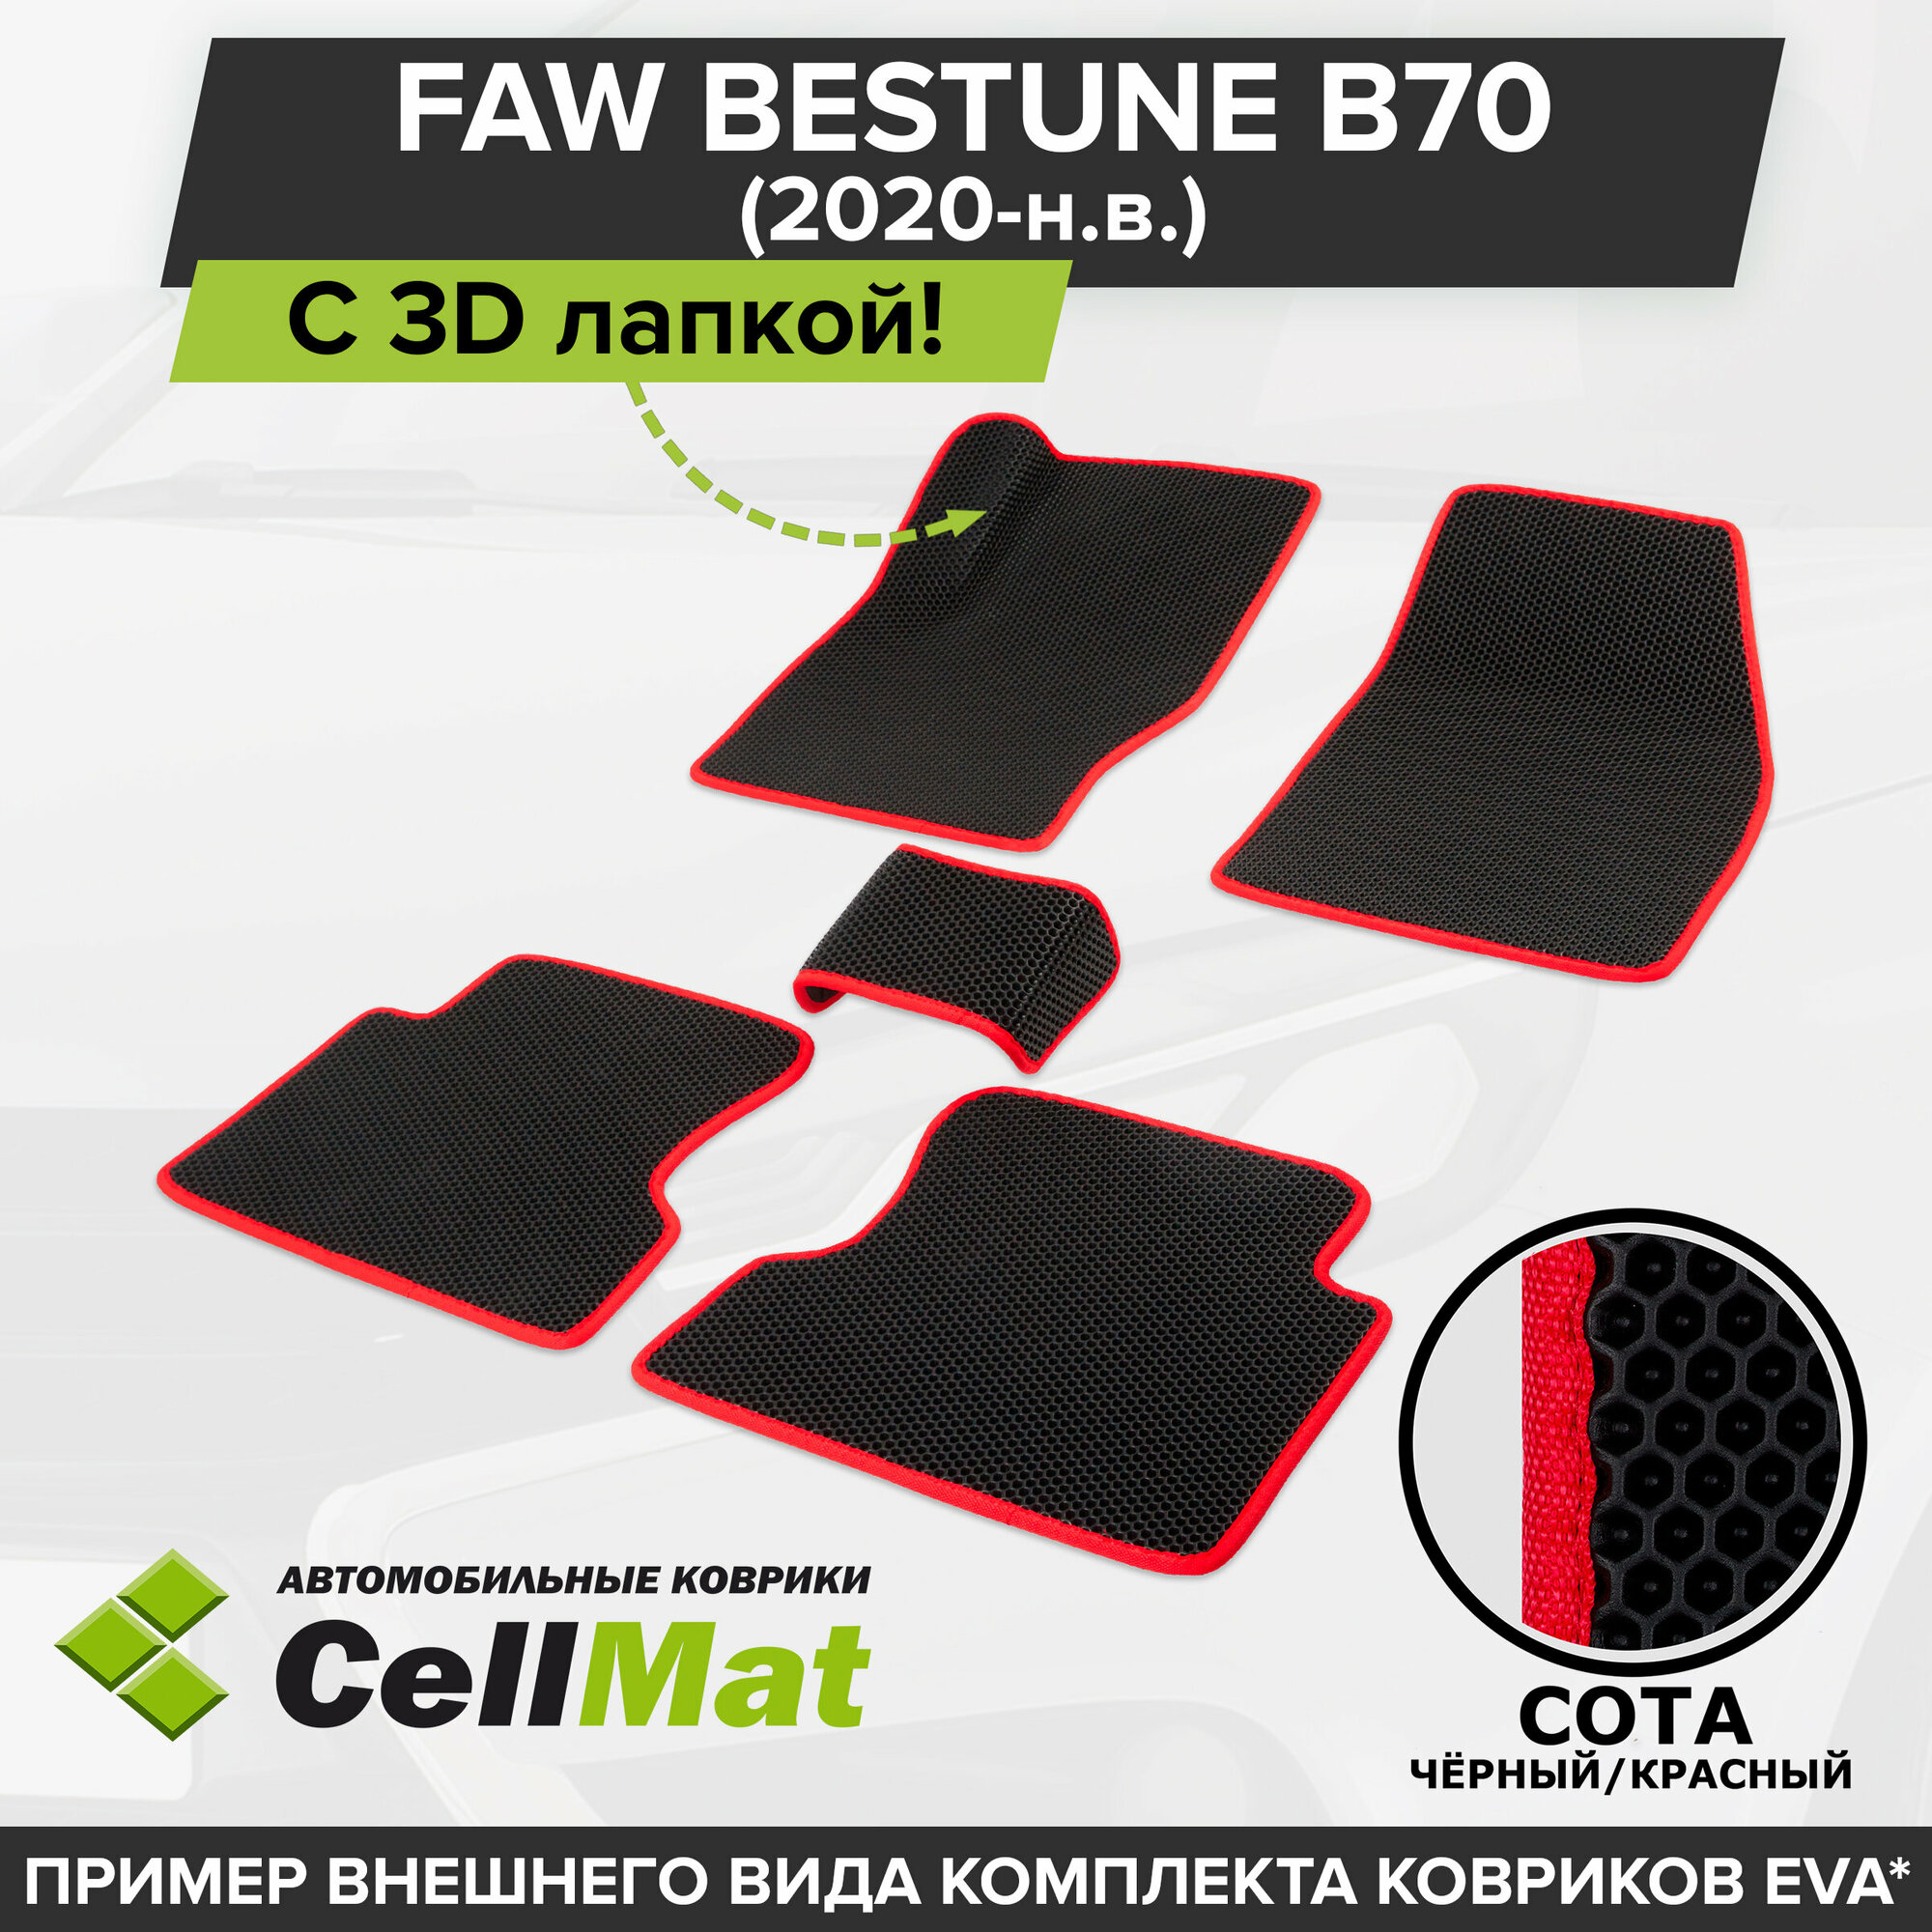 ЭВА ЕВА EVA коврики CellMat в салон c 3D лапкой для FAW Bestune B70 Фав Бестун Б70 2020-н. в.